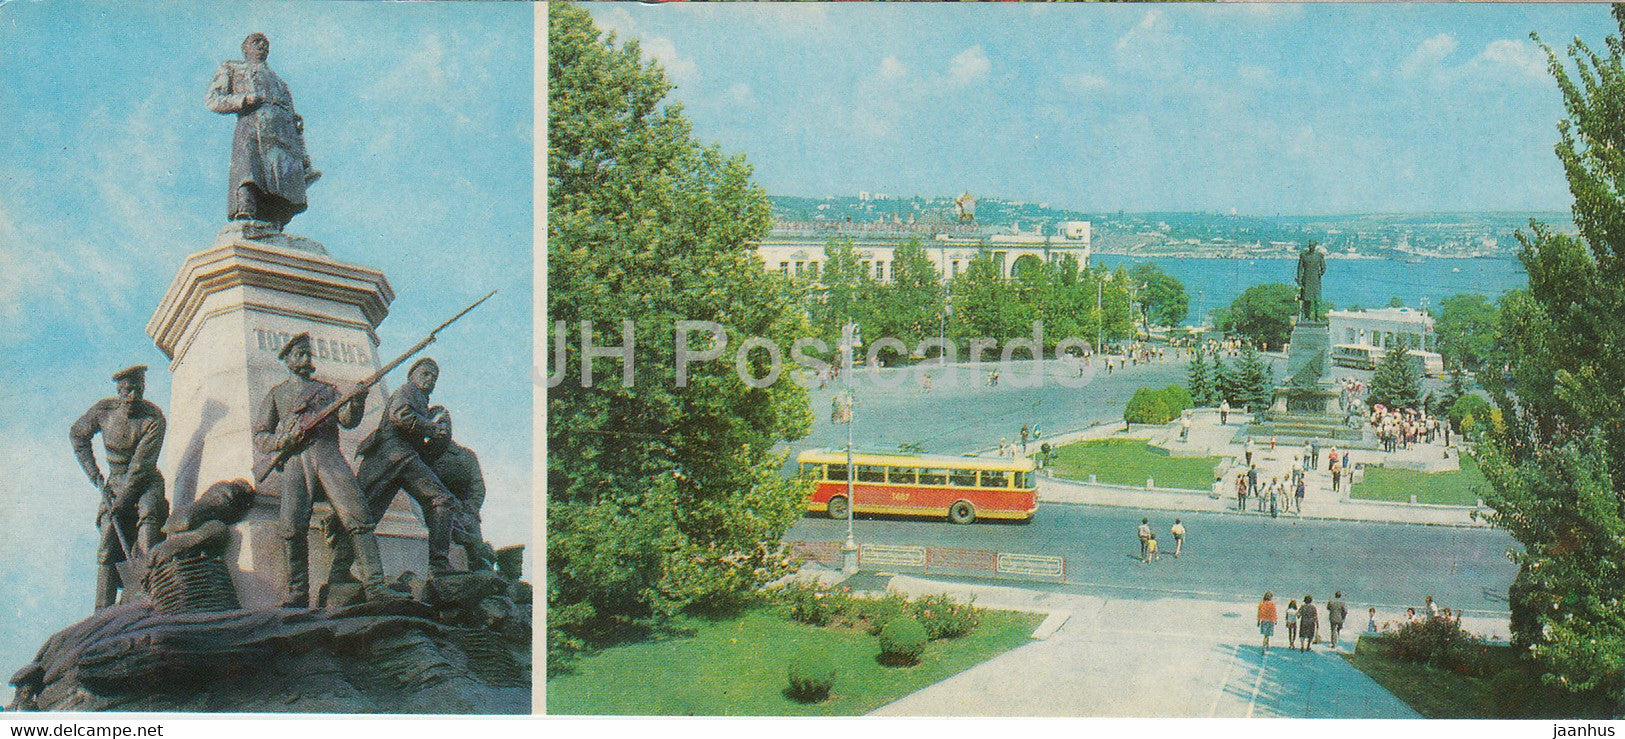 Sevastopol - monument to Totleben - Nakhimov Square - monument - trolleybus - Crimea - 1983 - Ukraine USSR - unused - JH Postcards